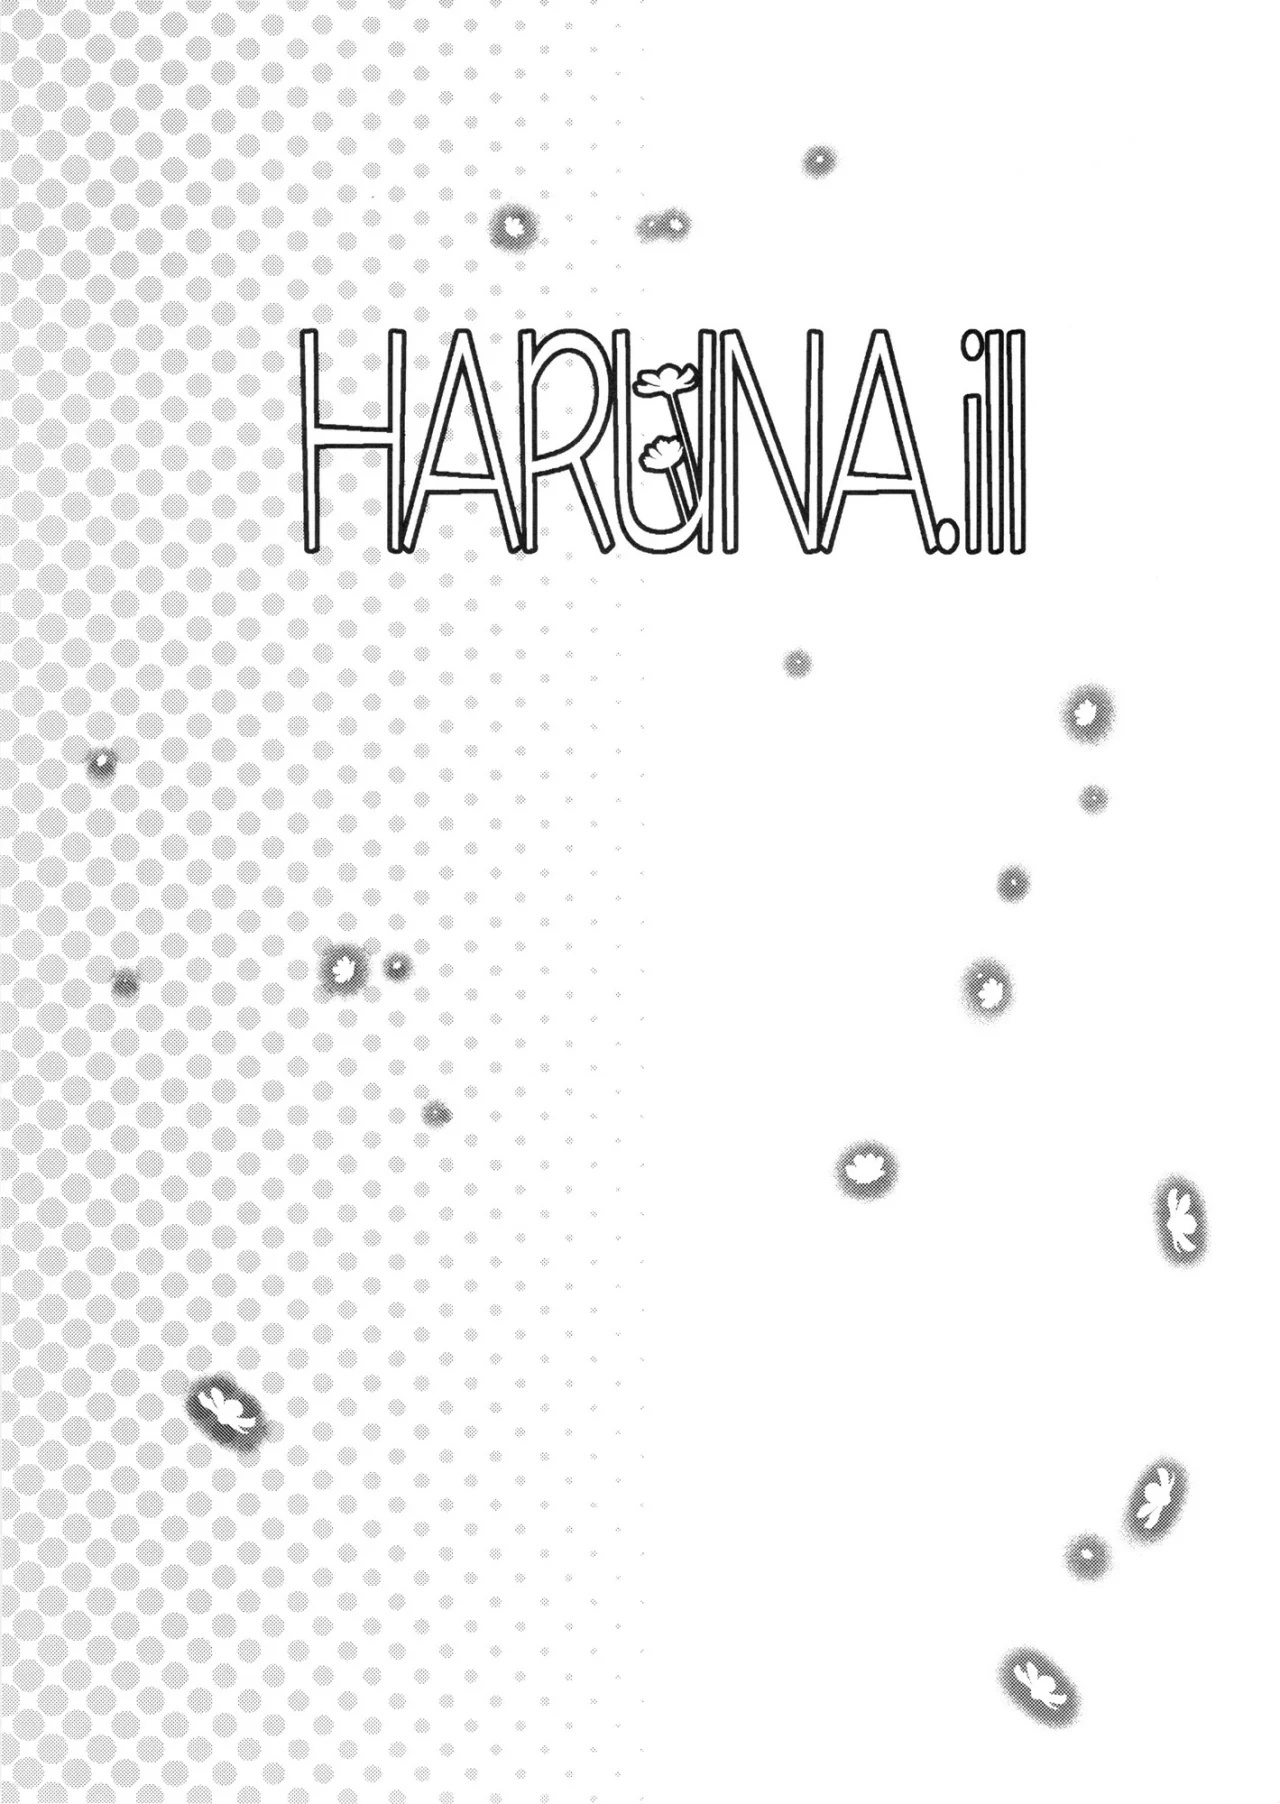 HARUNA_ill - 3